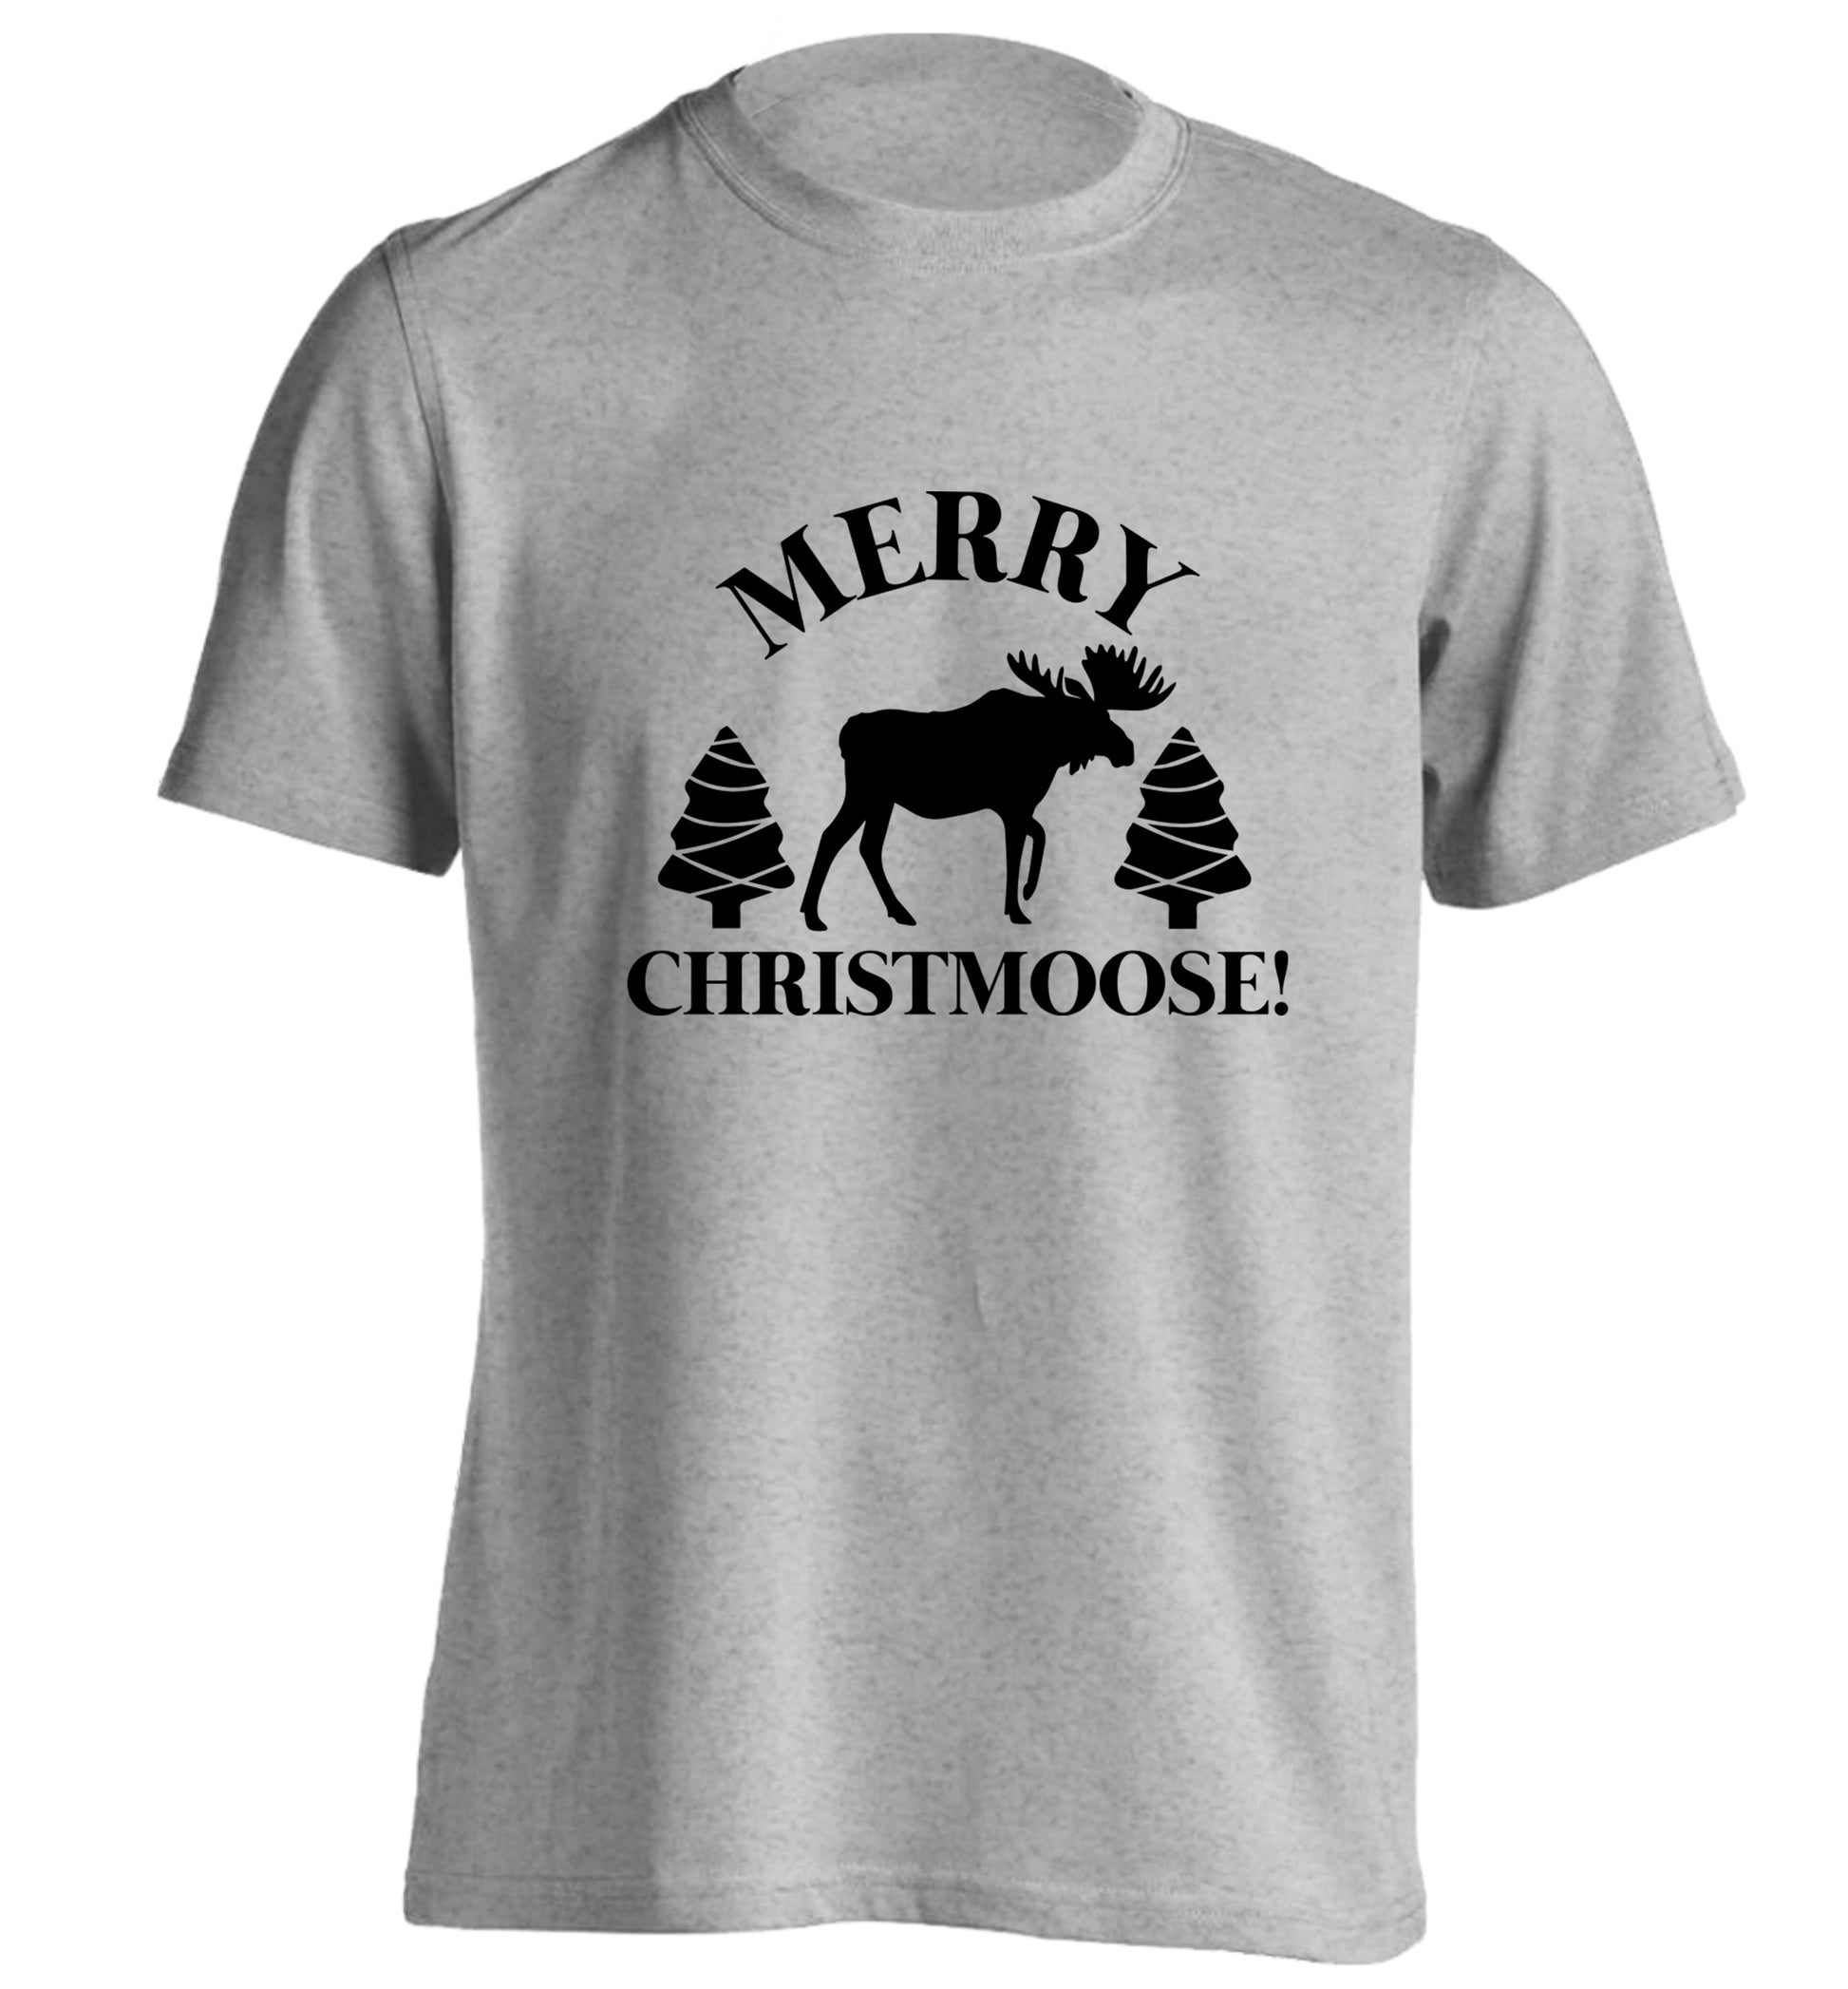 Merry Christmoose adults unisex grey Tshirt 2XL